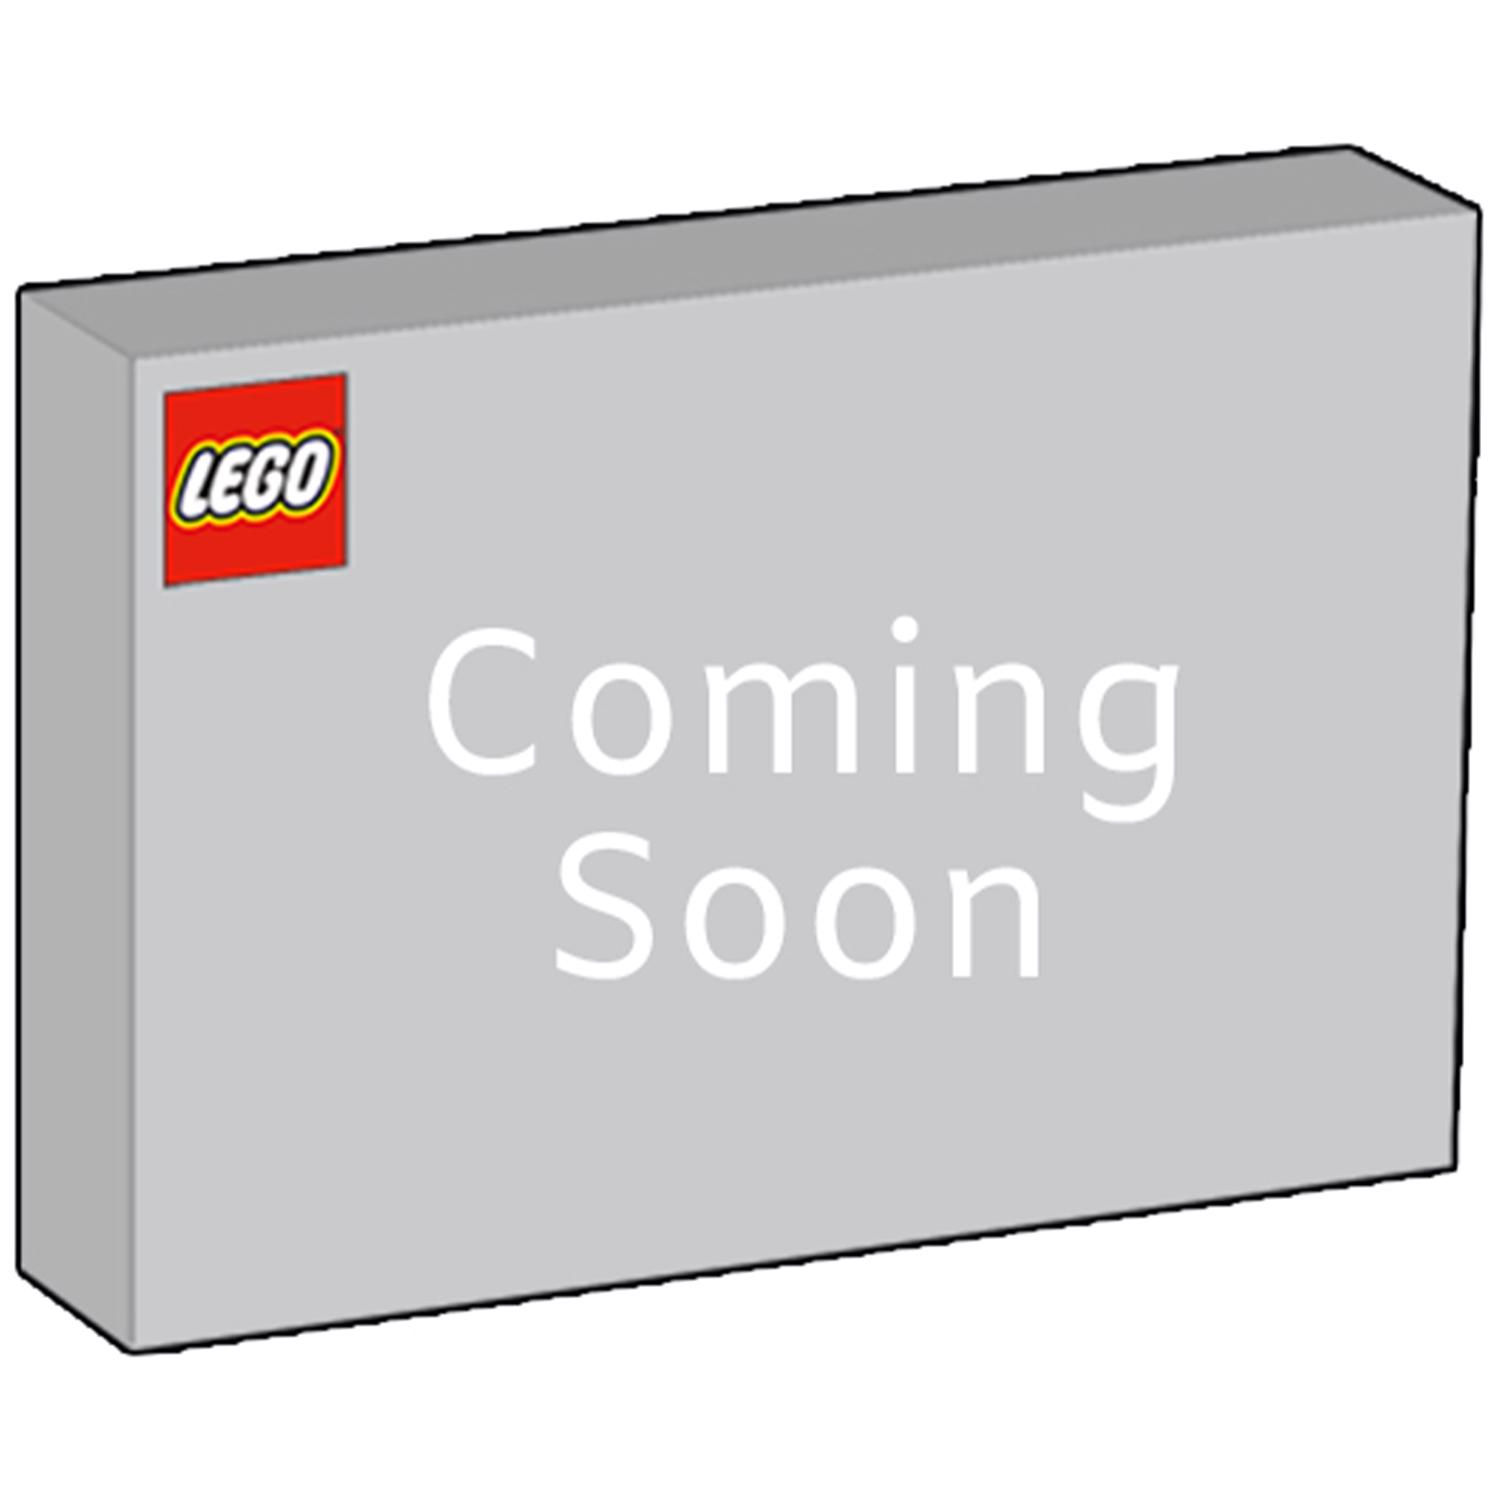 Photos - Construction Toy Lego Disney Advent Calendar Multicolored 312 pc 43253 